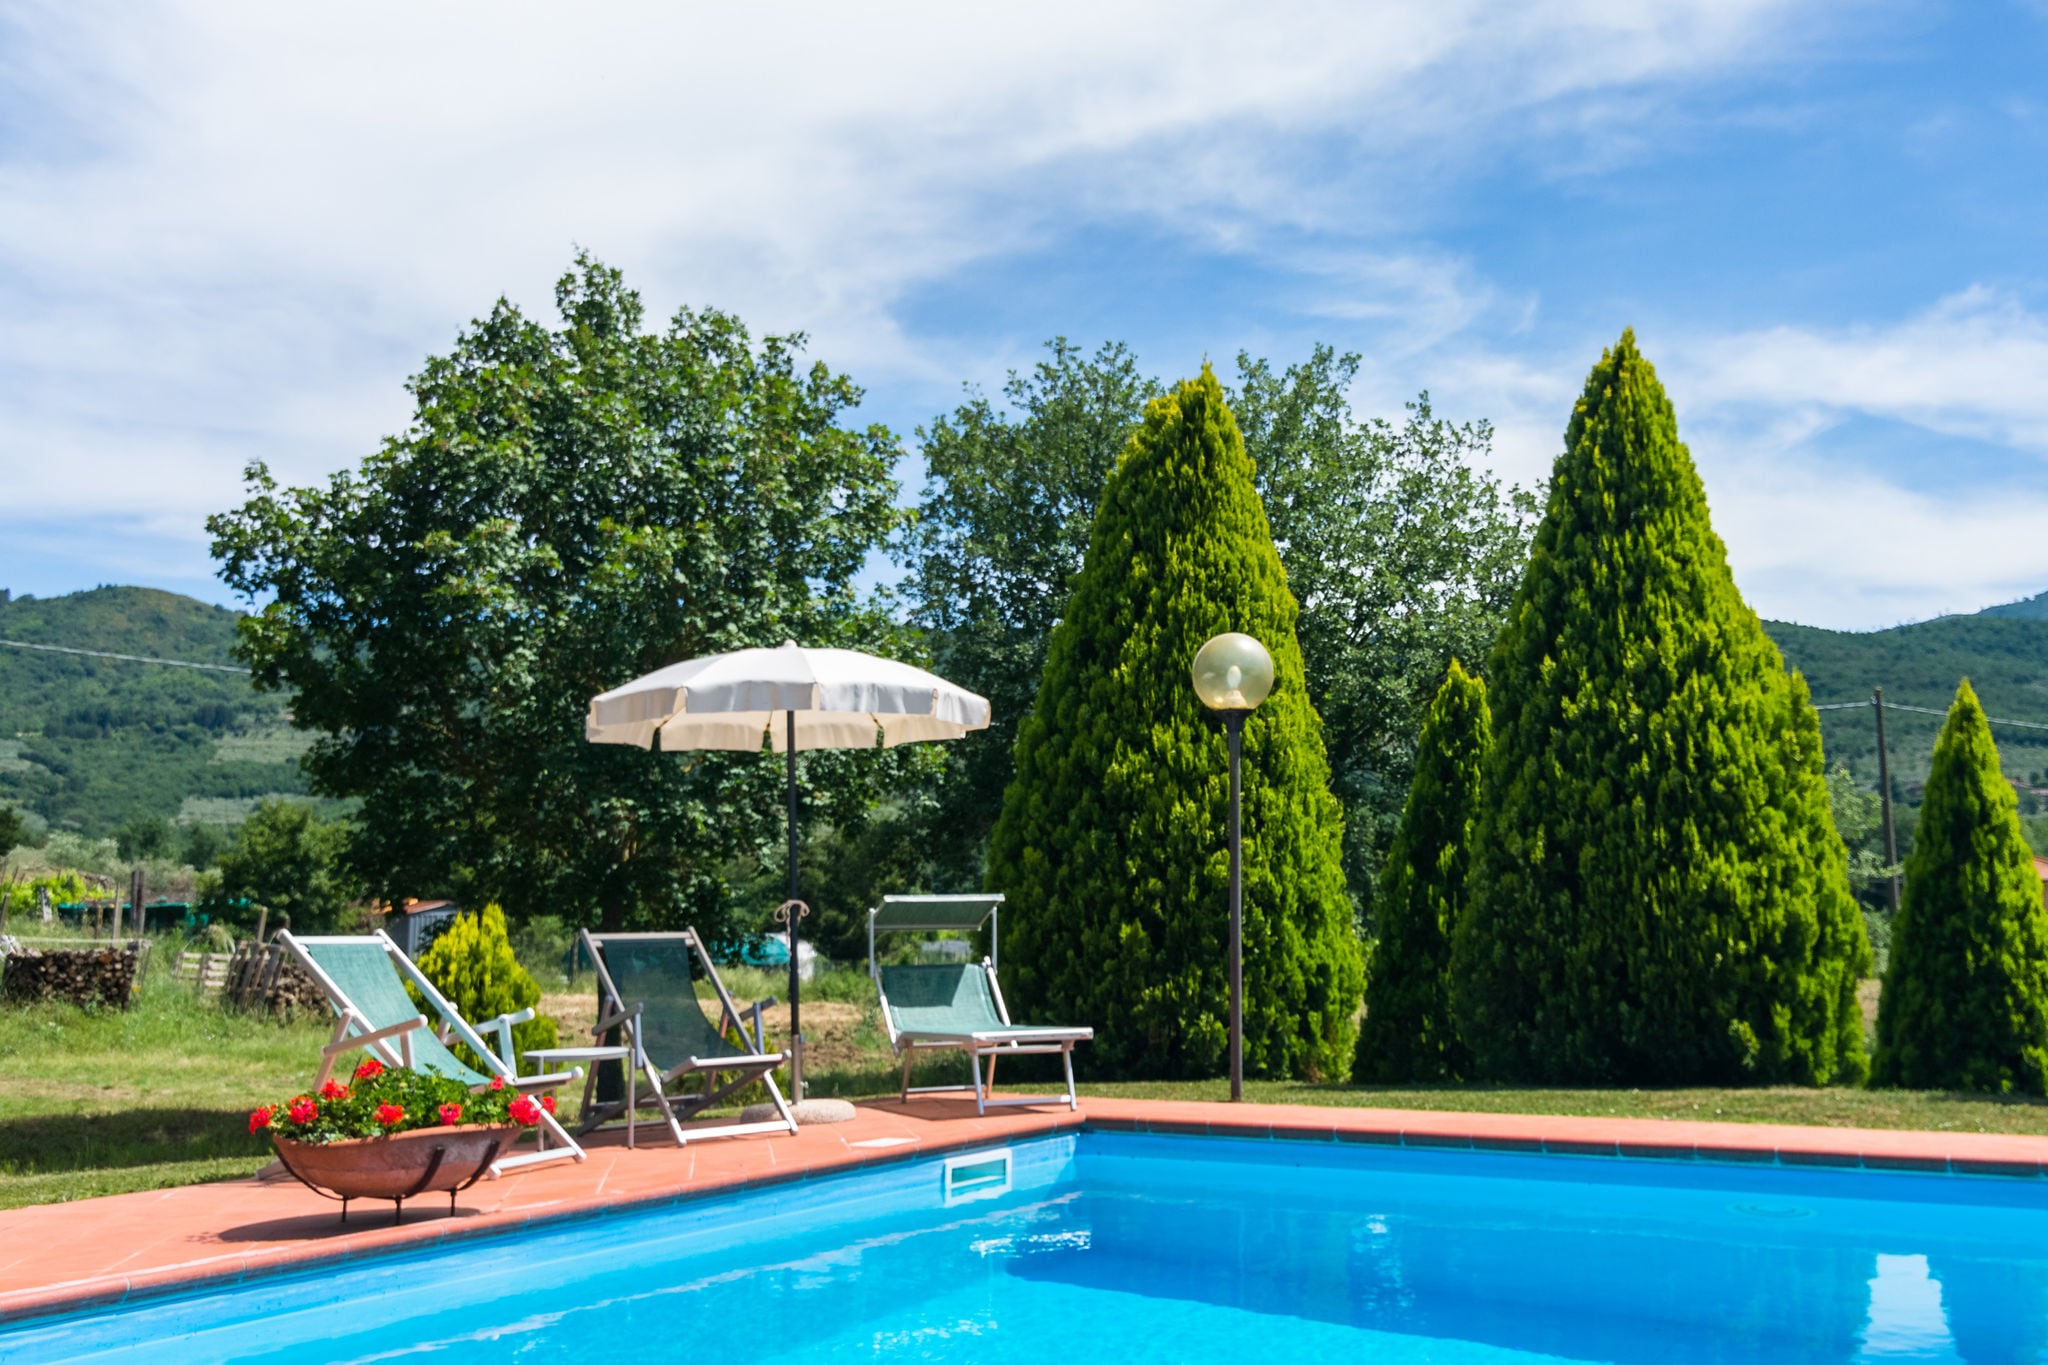 Schöner Bauernhof mit Swimmingpool in Seenähe in der Toskana